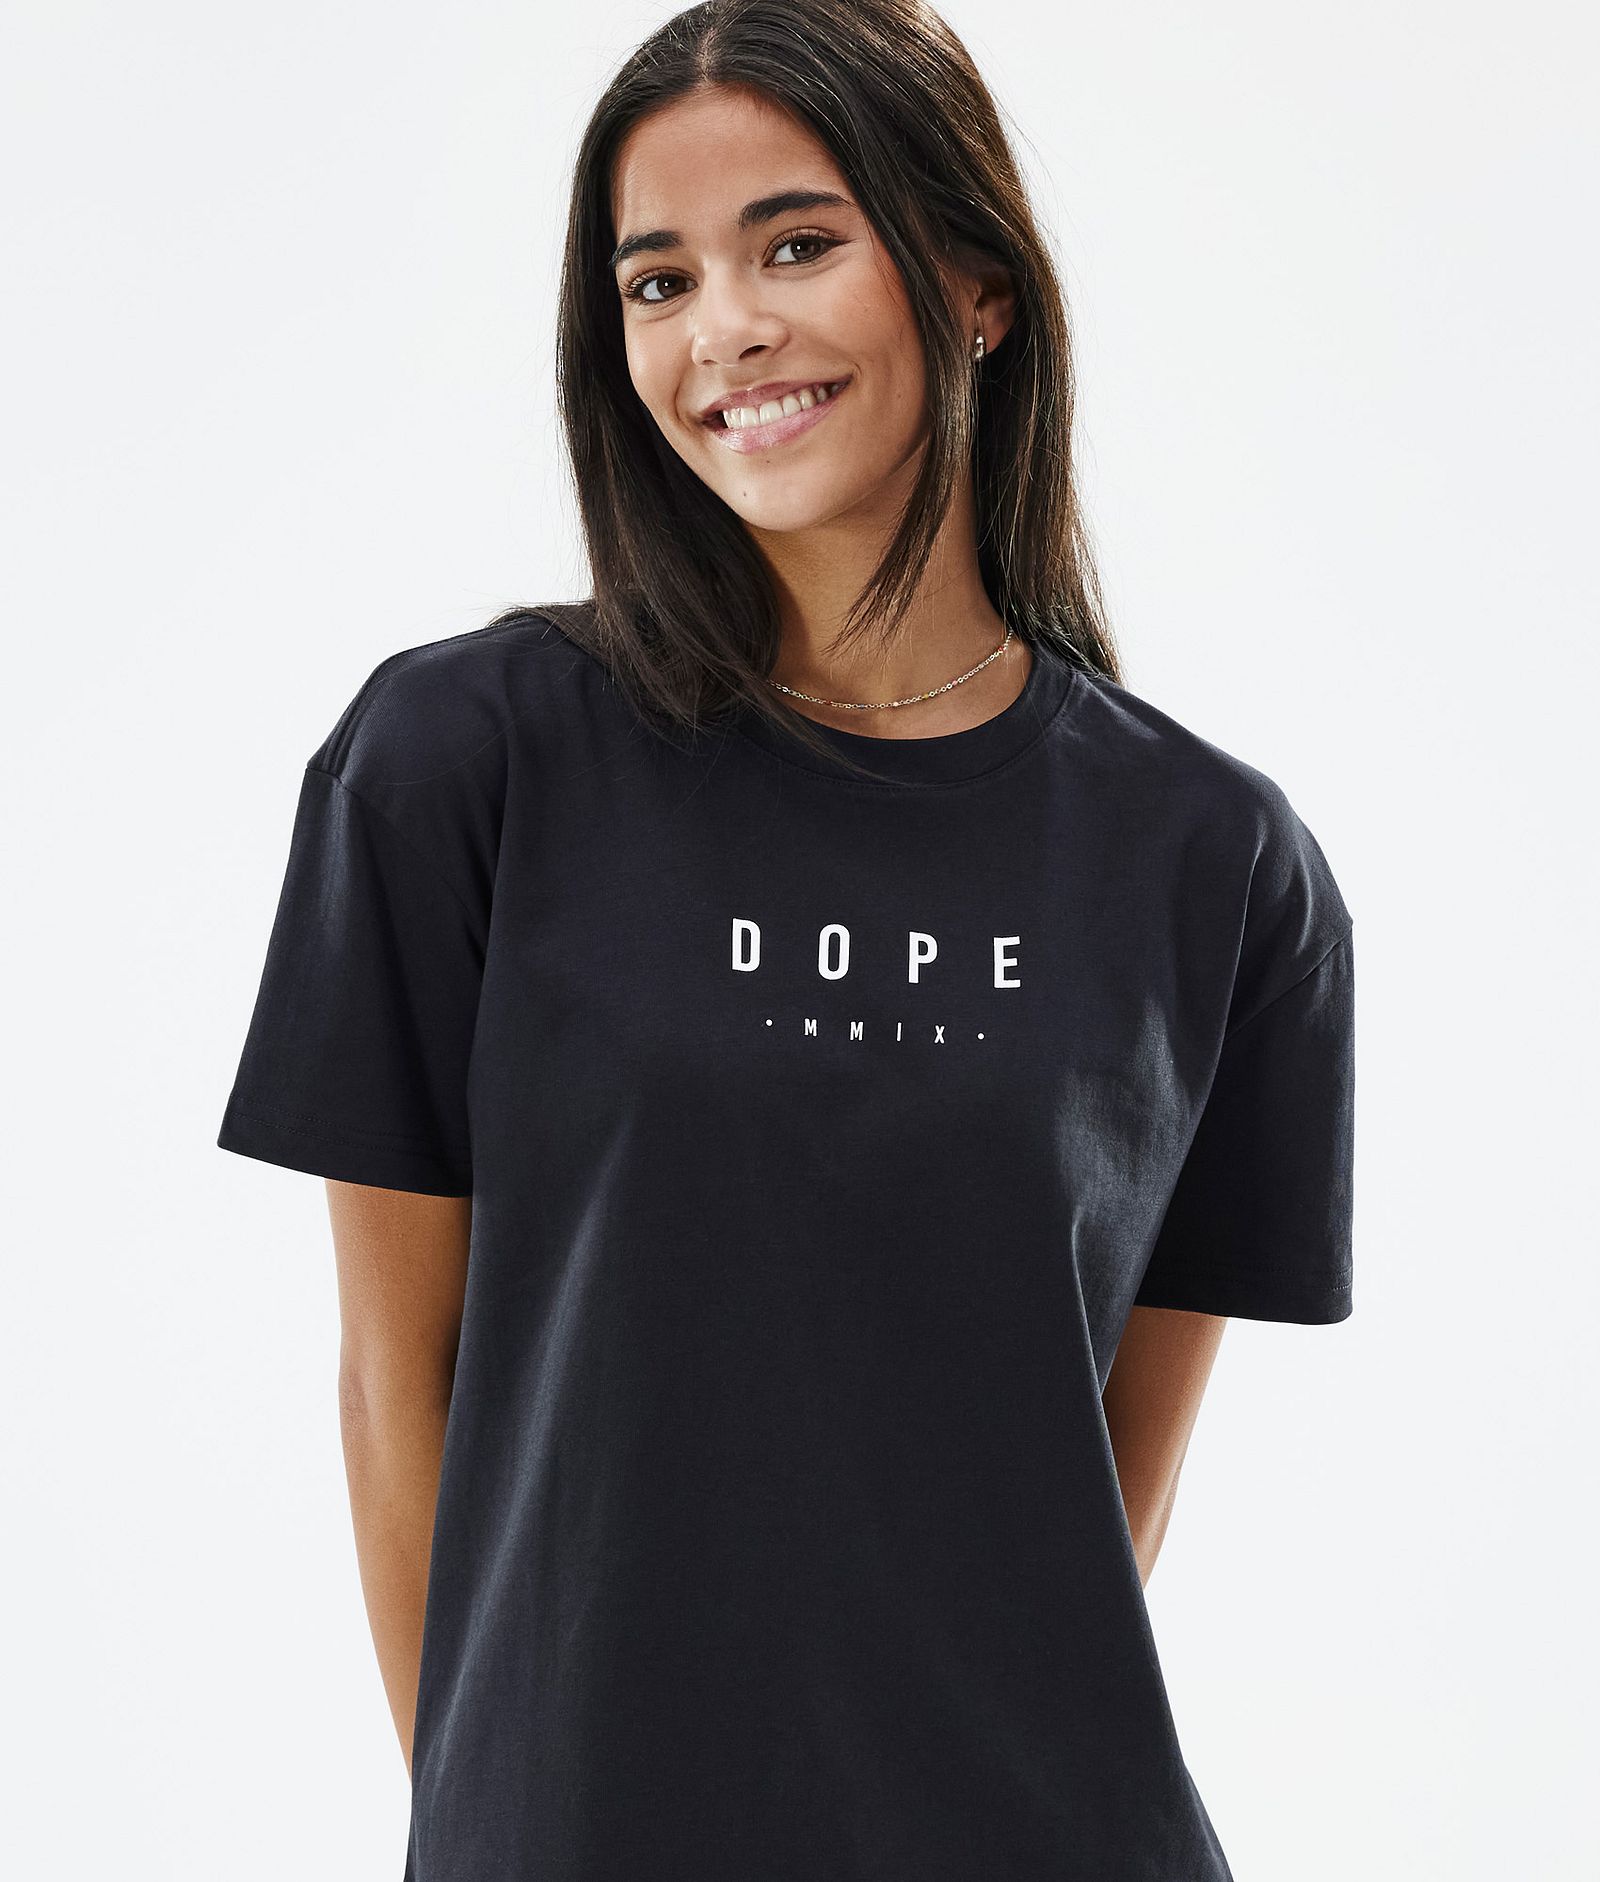 Dope Standard W 2022 Camiseta Mujer Peak Black